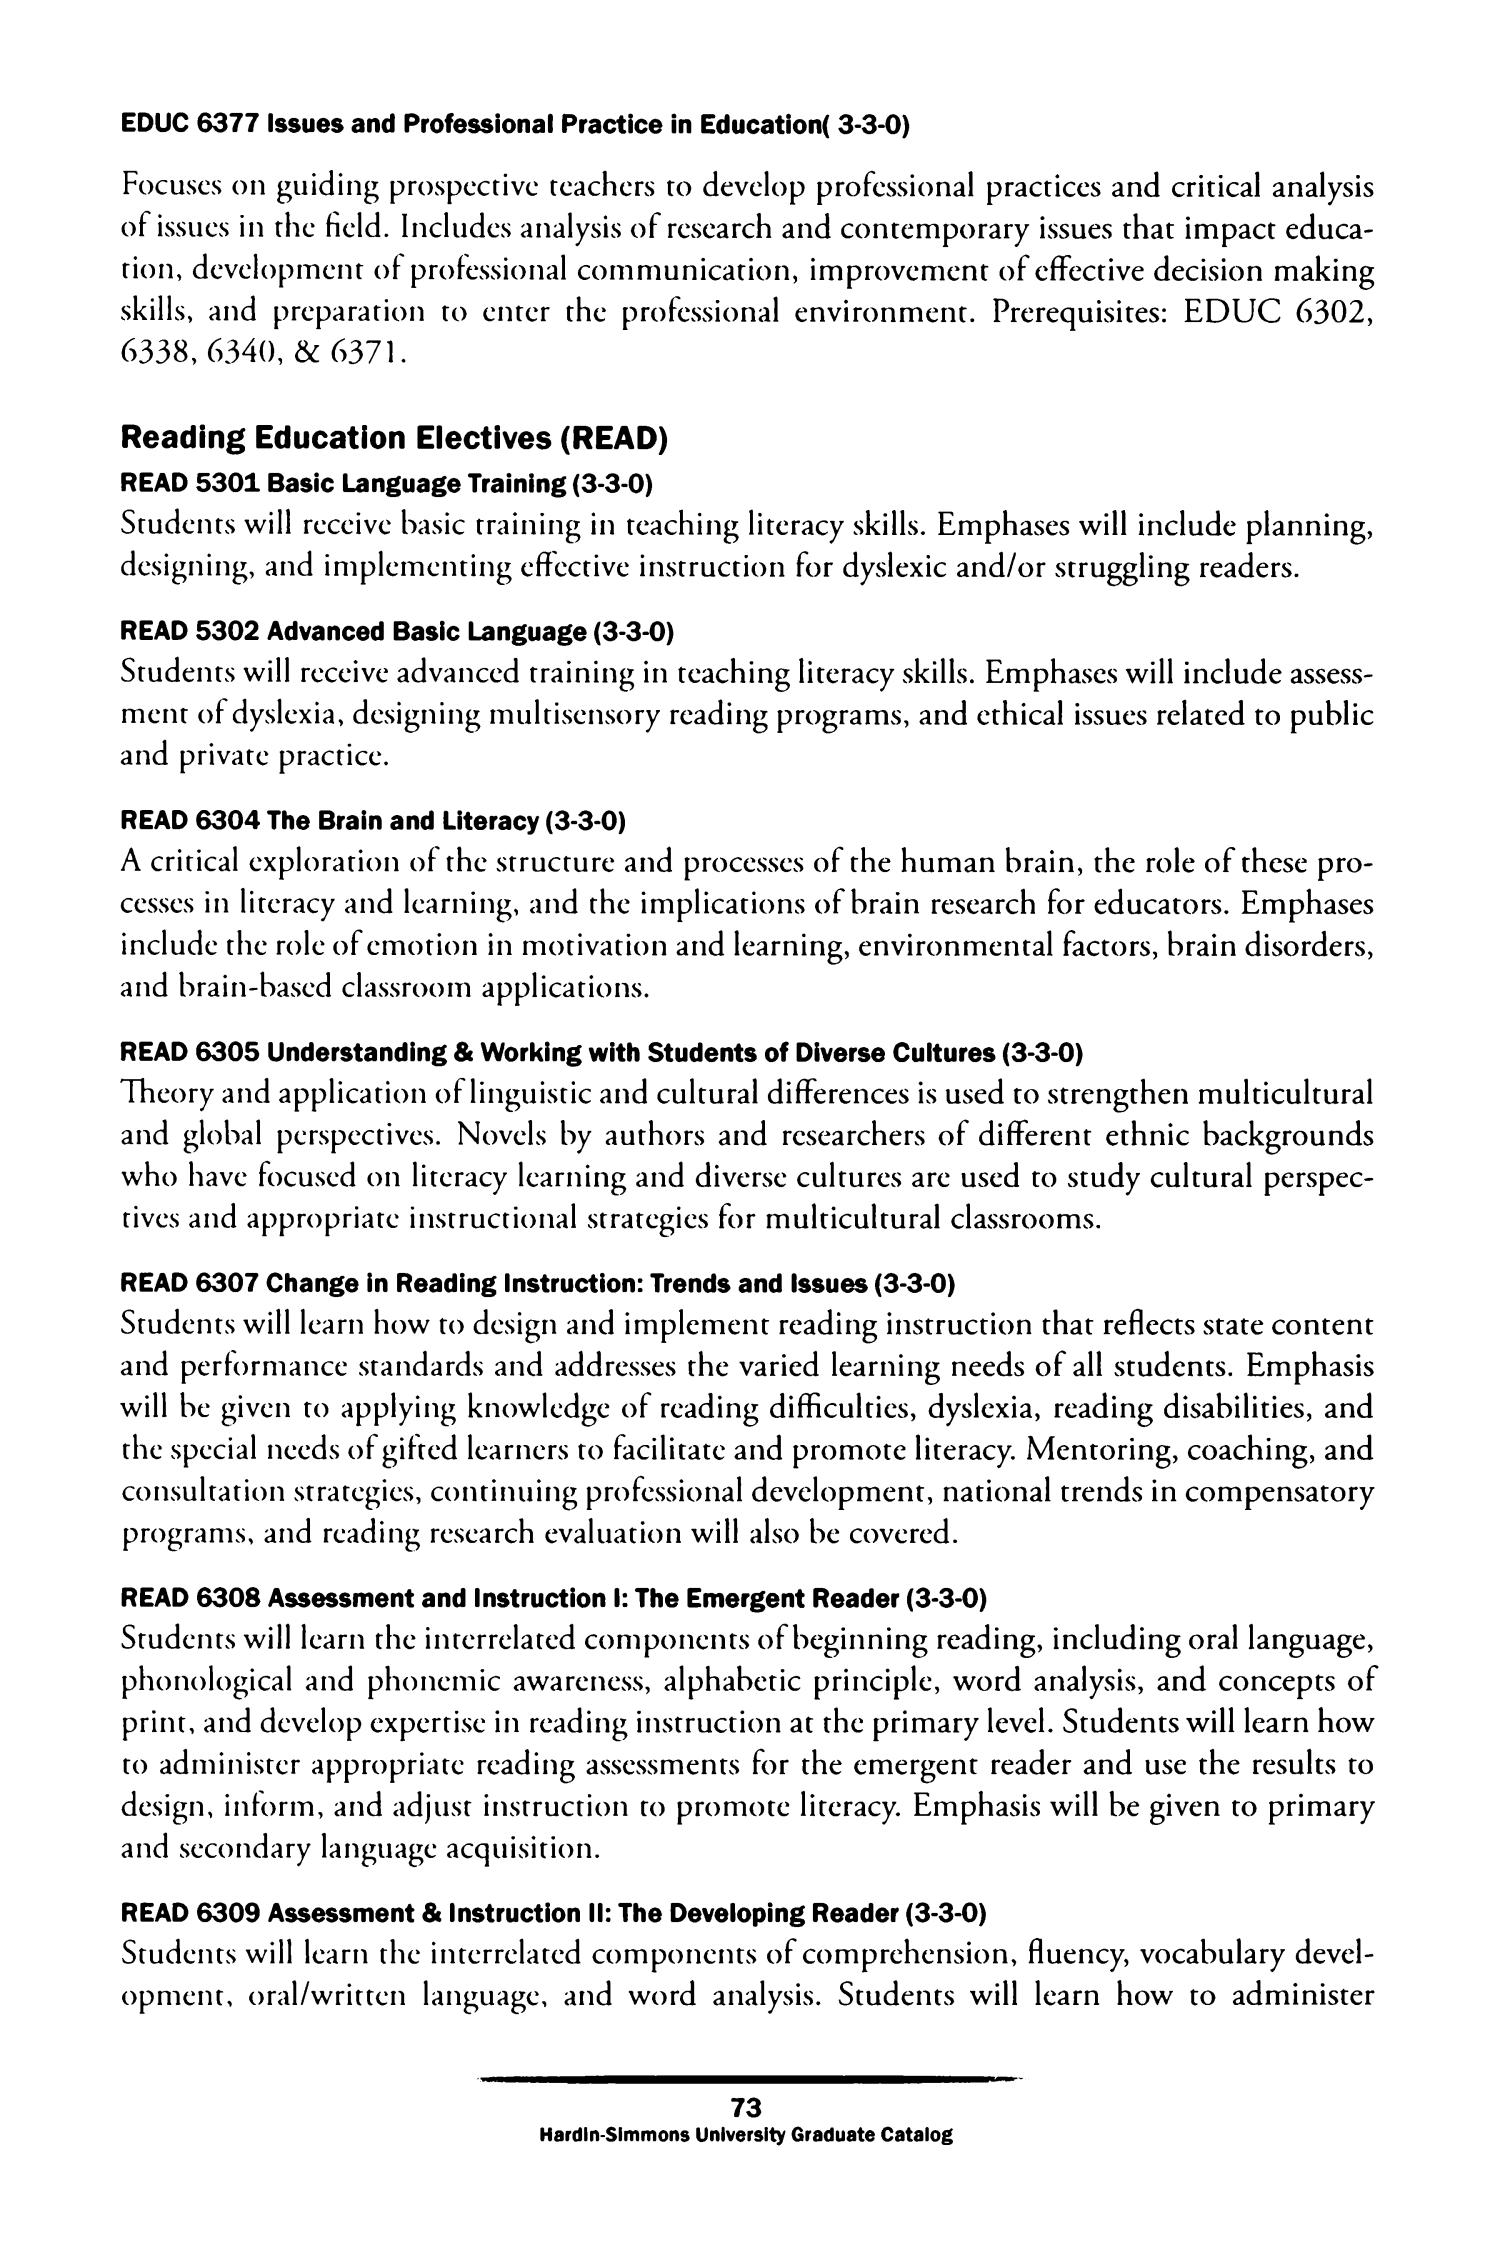 Catalog of Hardin-Simmons University, 2008-2009 Graduate Bulletin
                                                
                                                    73
                                                